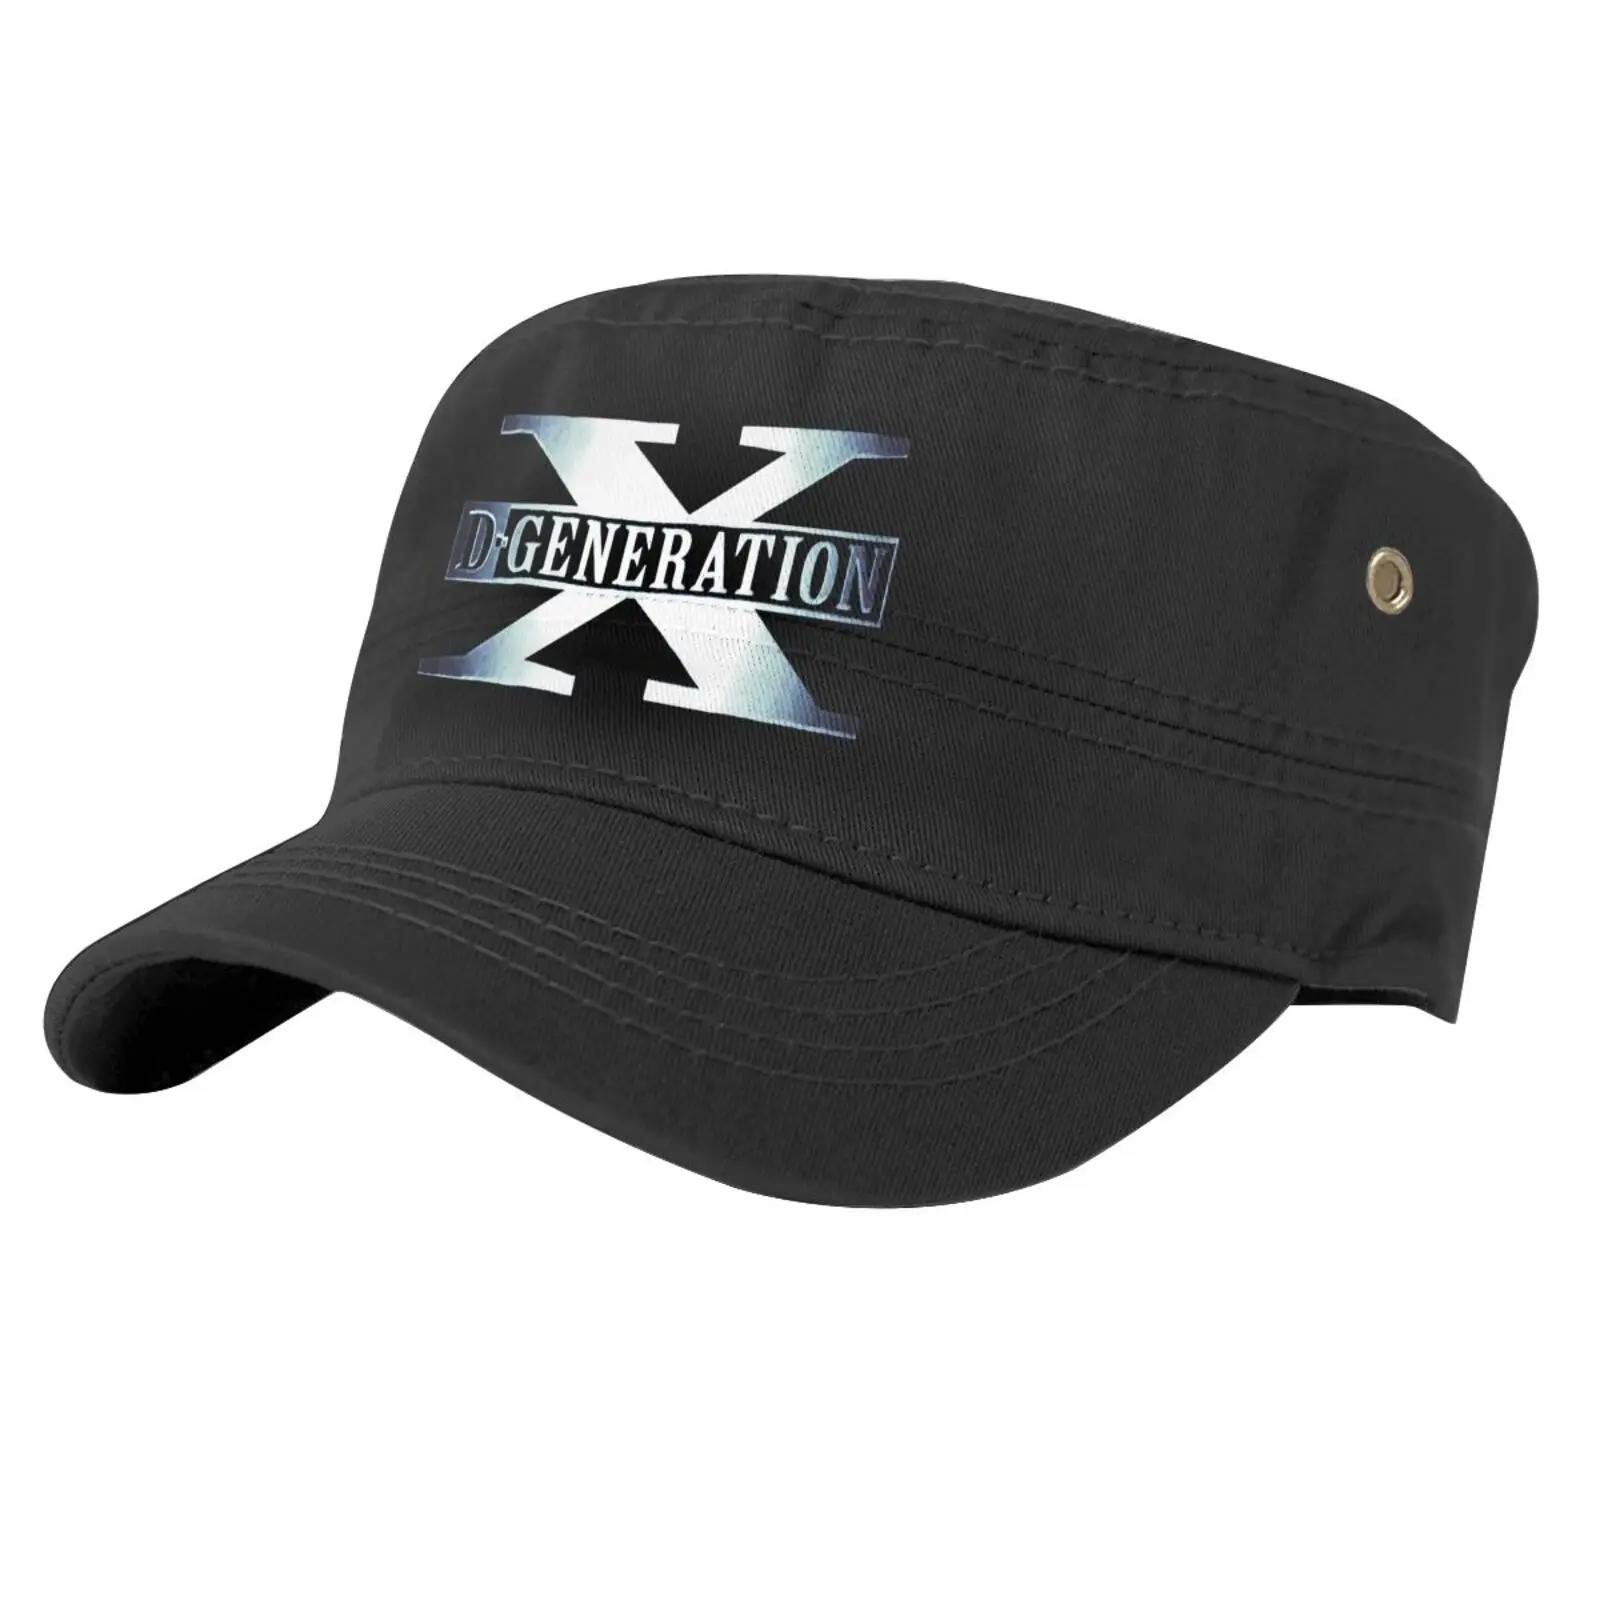 

D Generation X Dx Two Words Cap Golf Cap Beanies For Women Men's Stylish Caps Bucket Hat Man Cap Hats Women's Cap Women's Caps